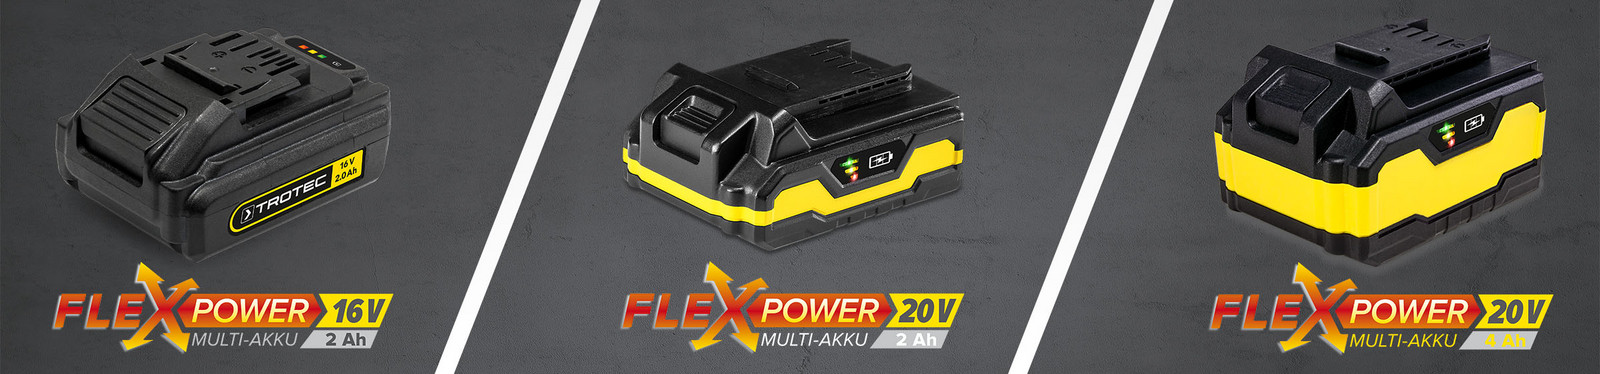 Flexpower – inovativní multiakumulátorový systém od firmy Trotec